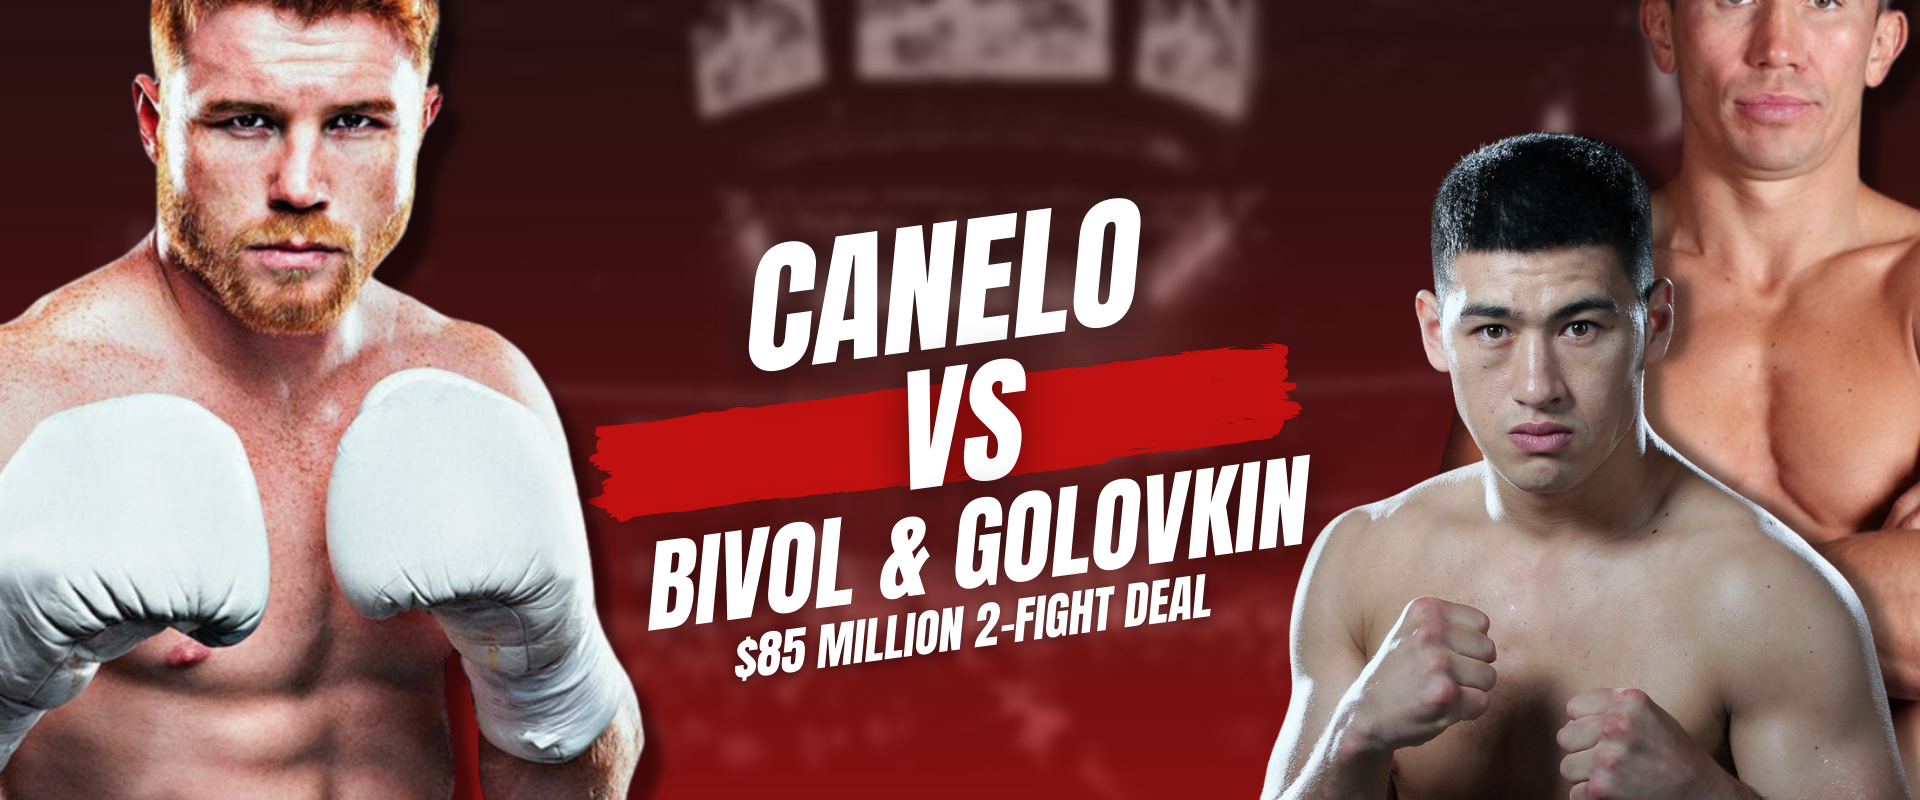 1920x1080_Canelo Alvarez Nears an $85 Million 2-Fight Deal to Face Dmitry Bivol and Gennadiy Golovki-Ron